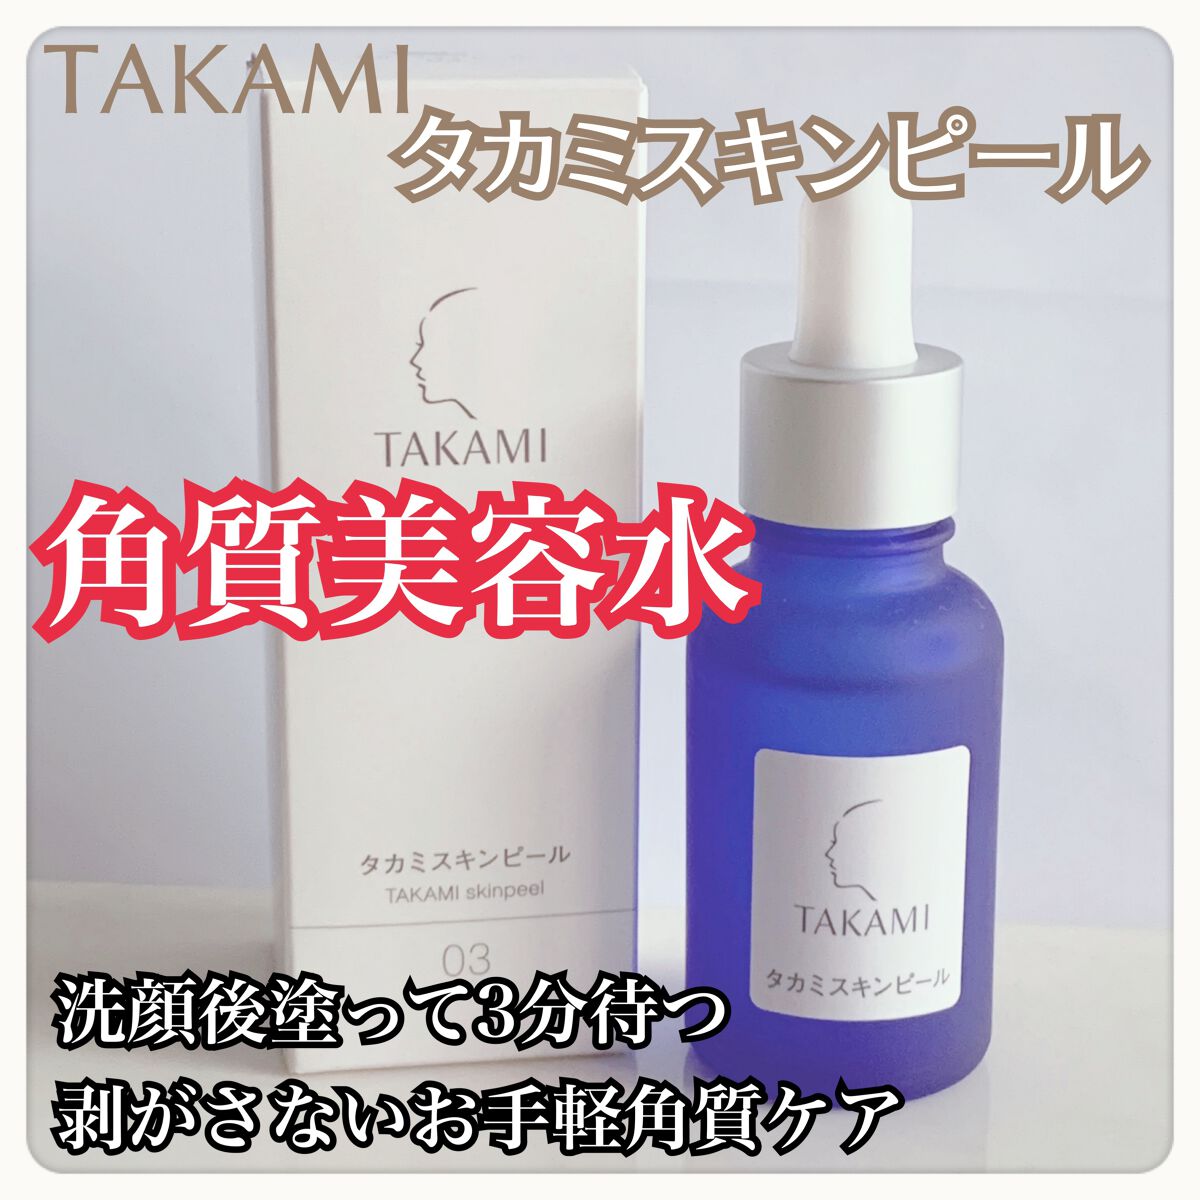 TAKAMIタカミ タカミスキンピール30ml2個 - 美容液